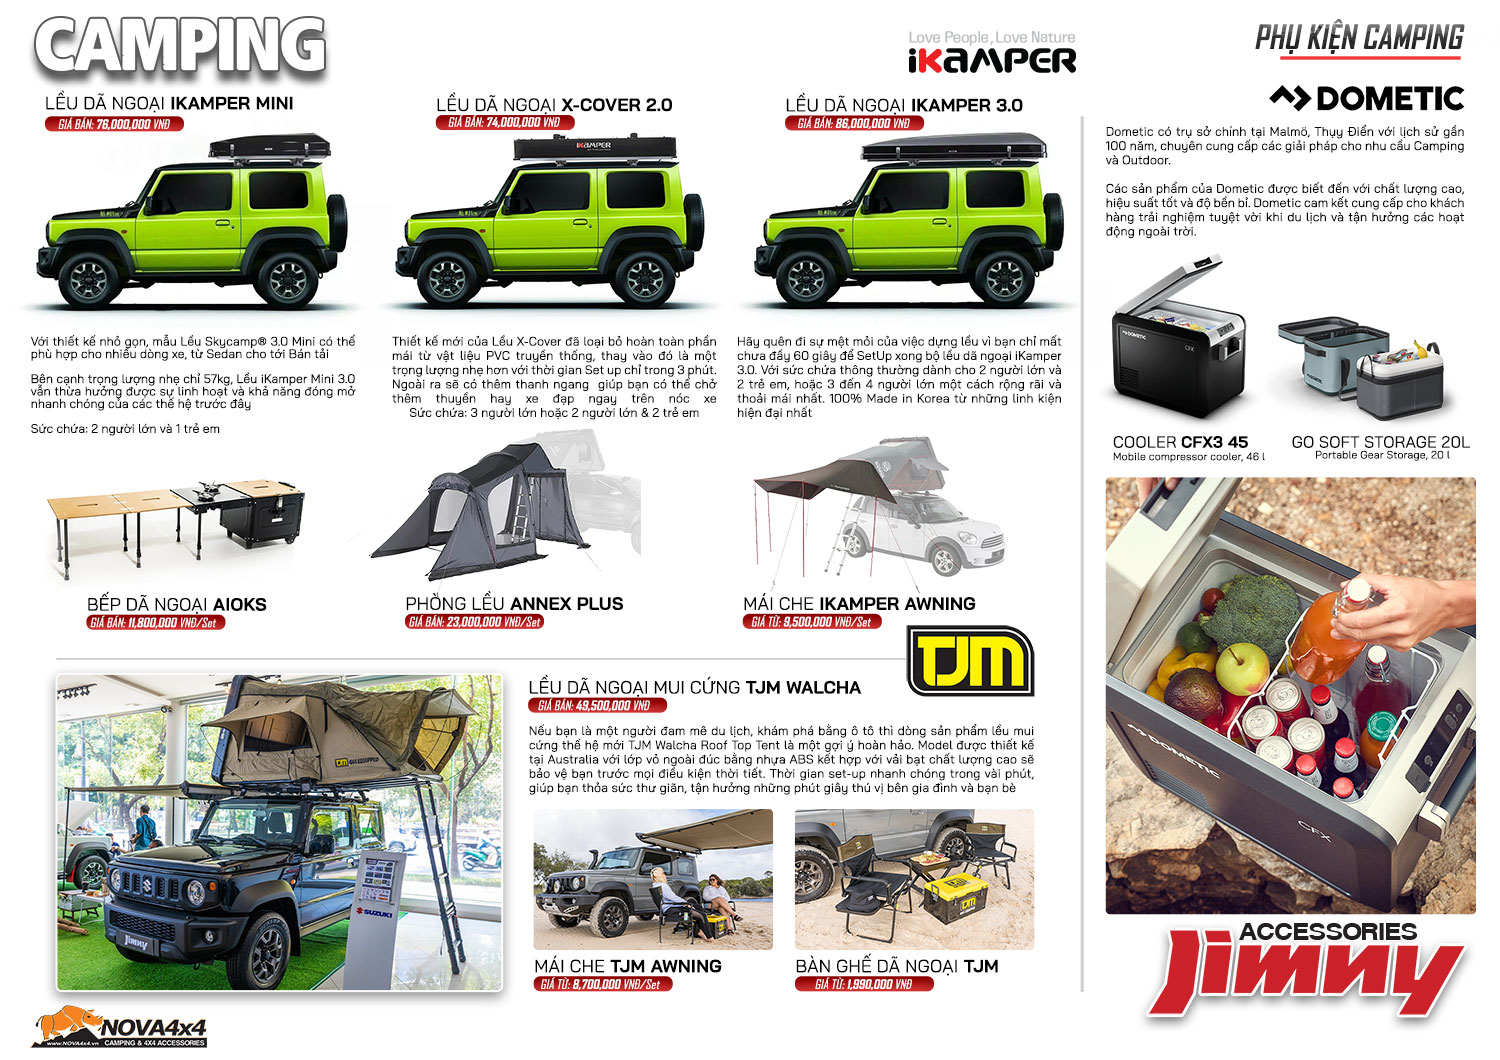 Suzuki Jimny - chủ đề Camping